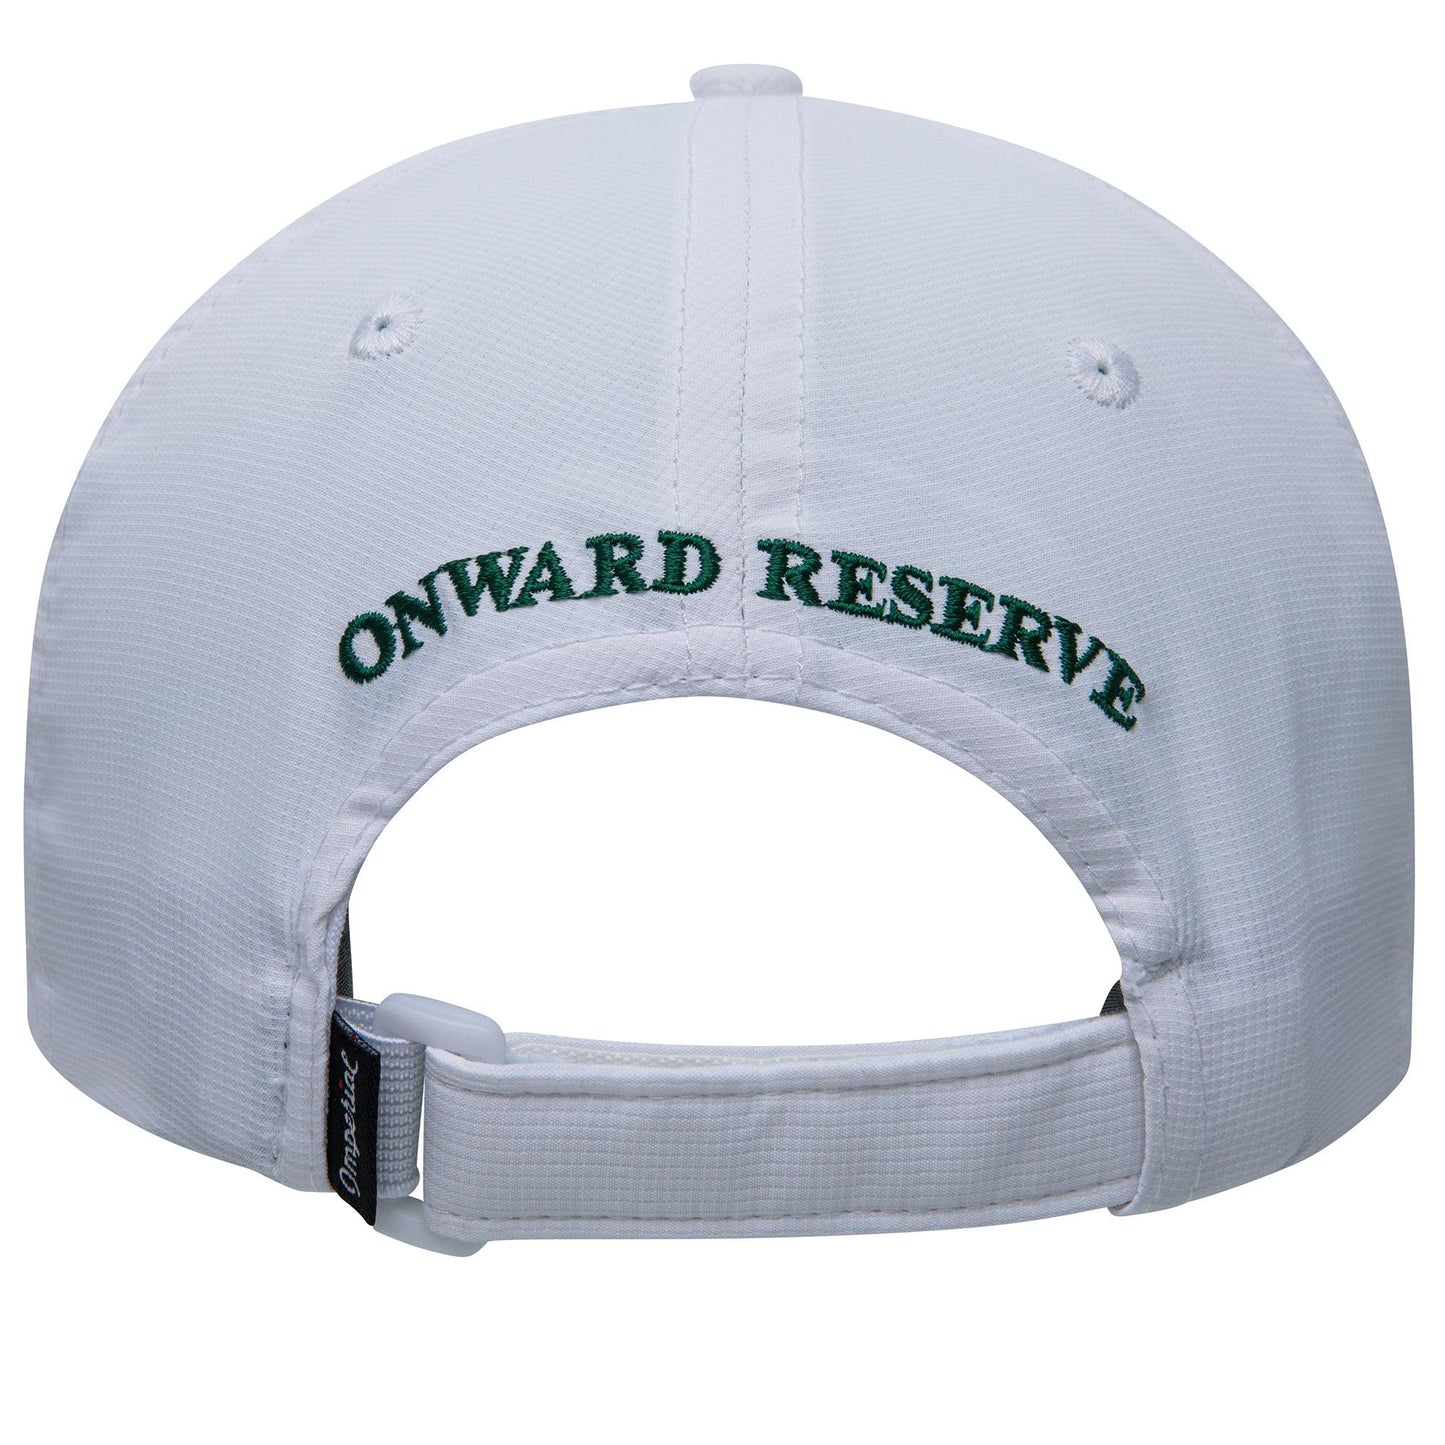 Miami Hat - Onward Reserve